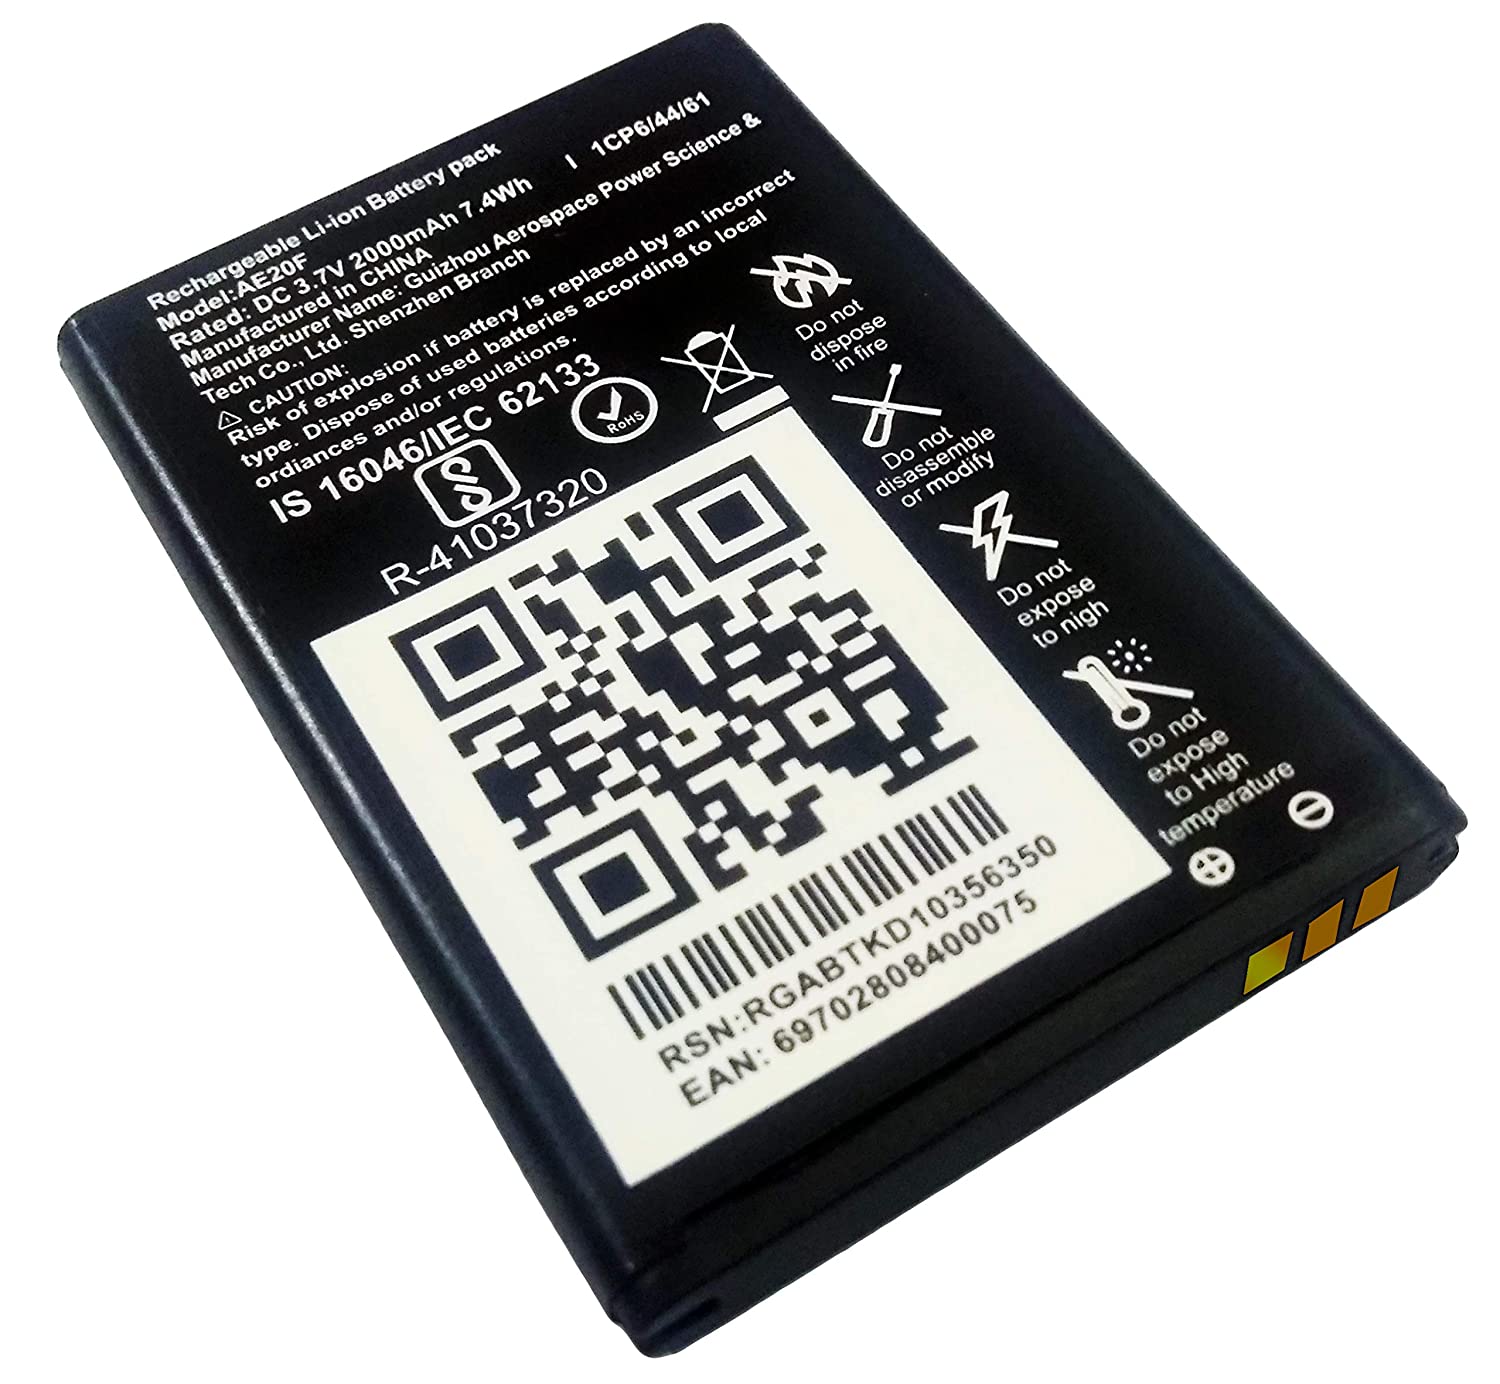 Buy GenericJio Keypad Mobile Phone Battery 2000 mAh 3.7V Made in India